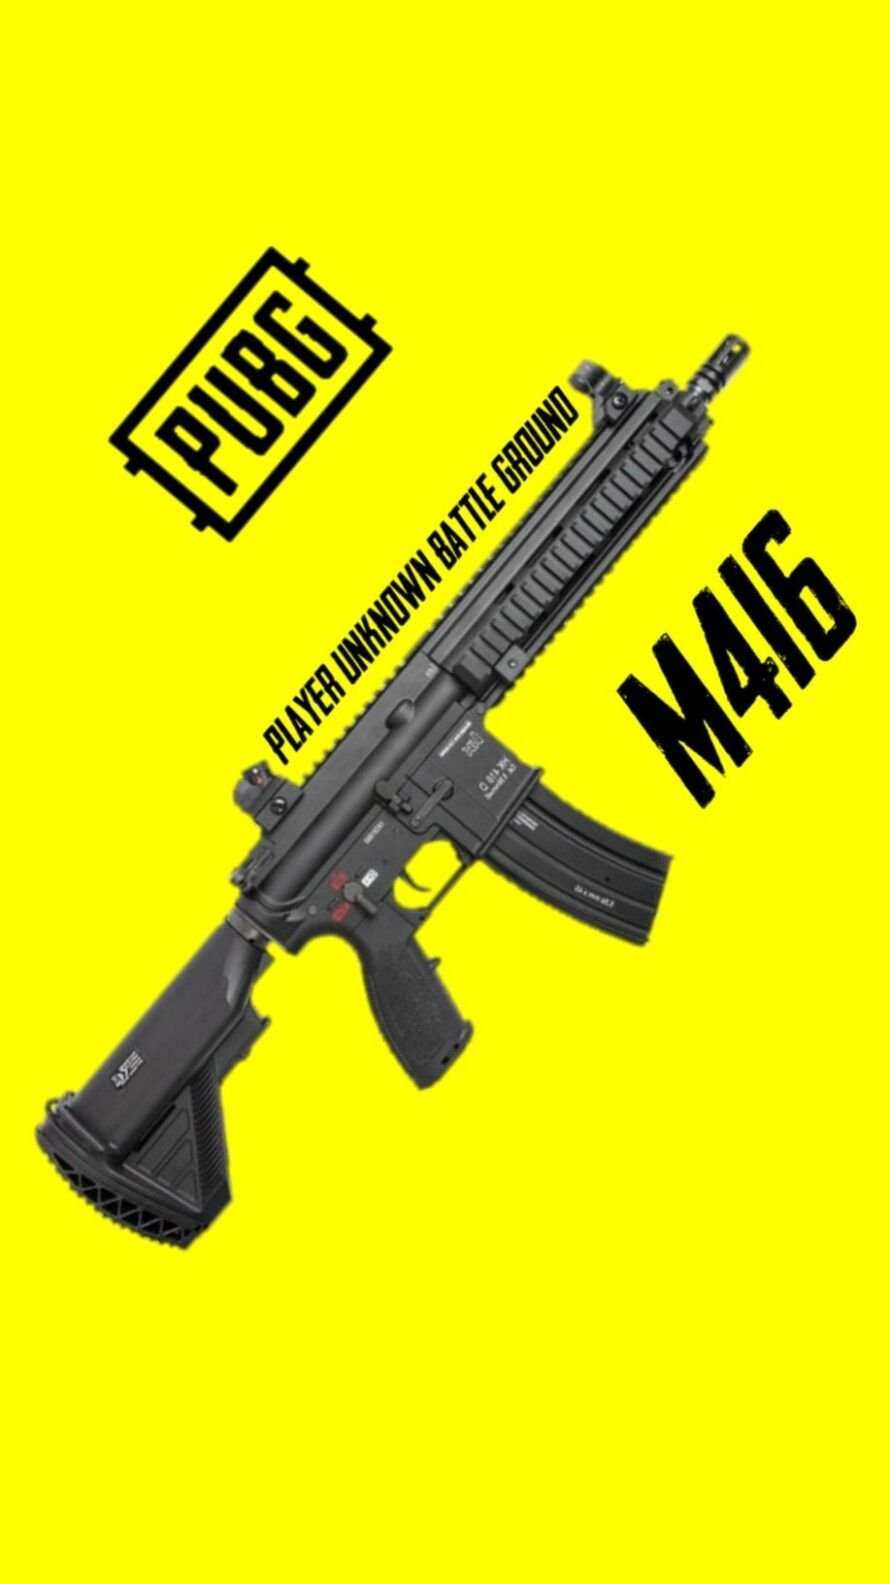 Yellow background pubg gun - M416